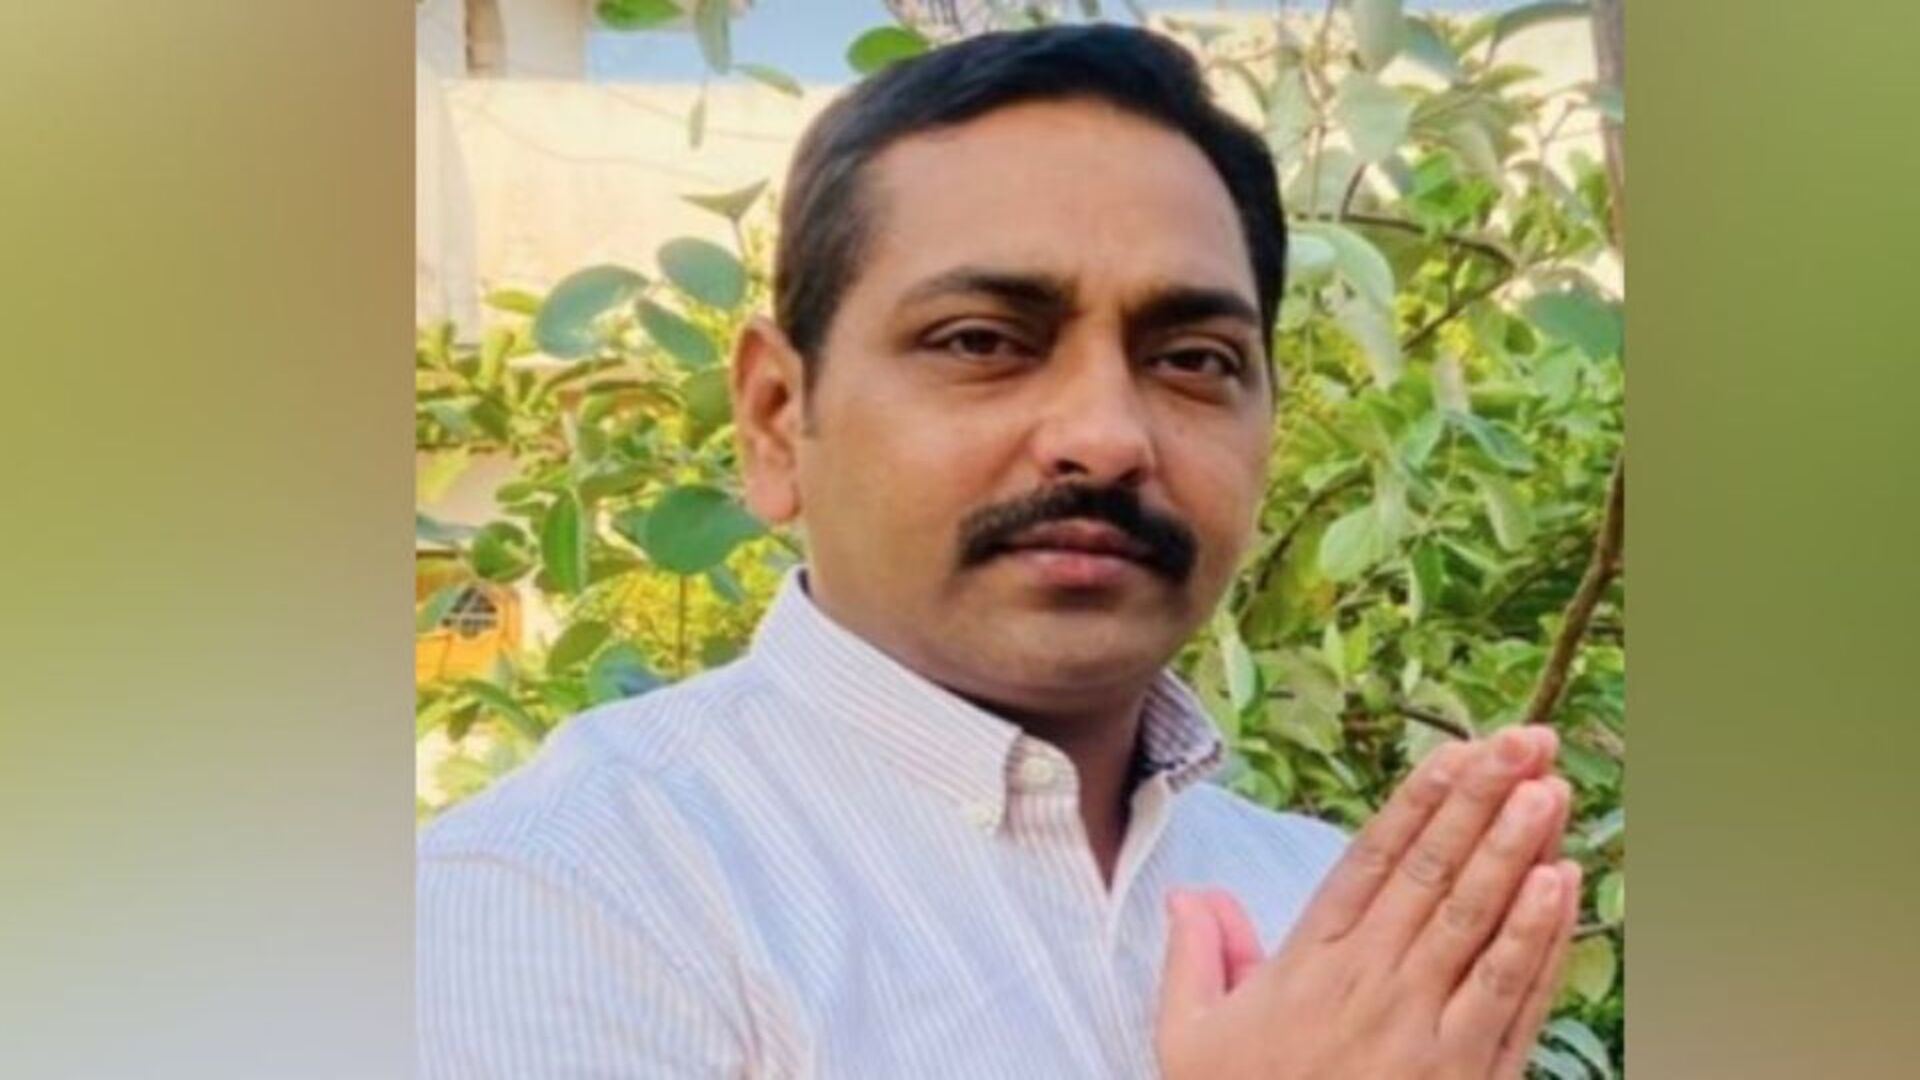 BJP wins Senior Dy Mayor and Deputy Mayor elections in Chandigarh